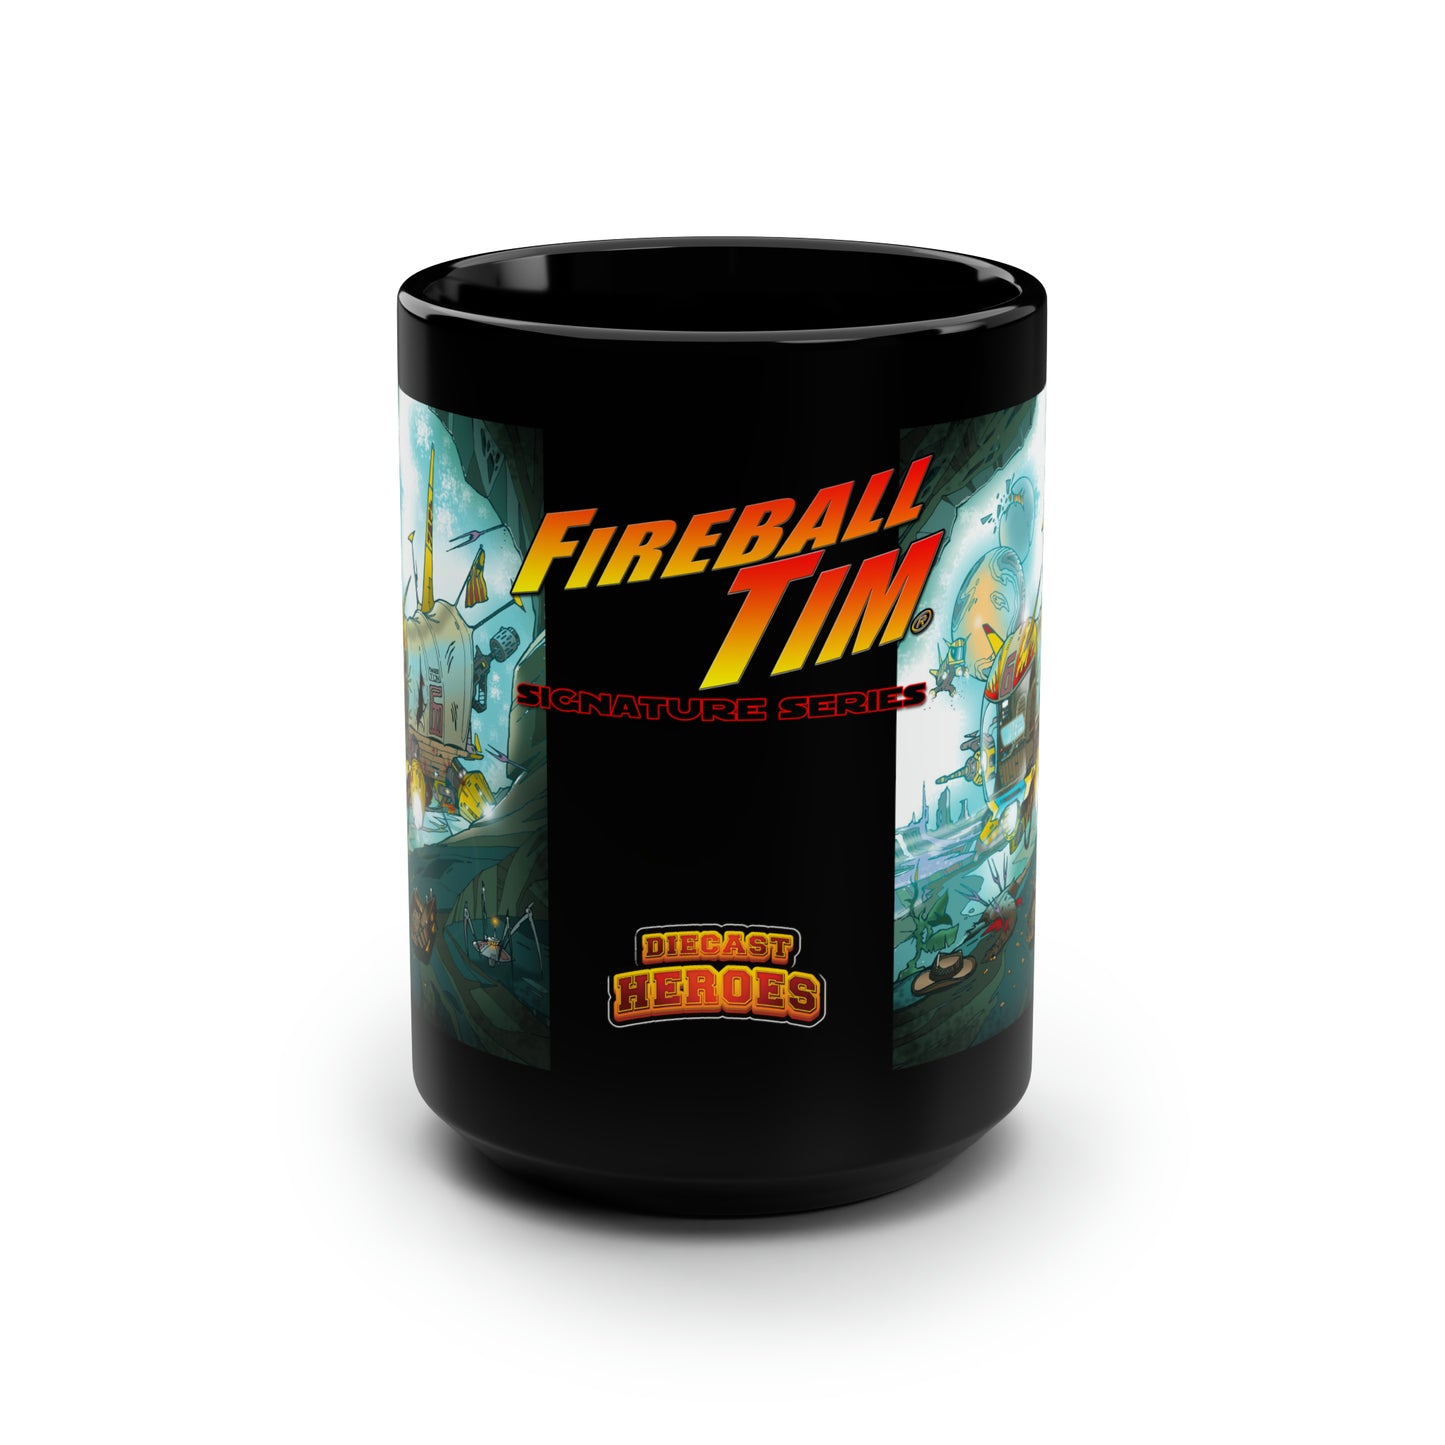 Fireball Tim Signature Series SPACE COWBOYS Diecast Heroes Cover #11 Black Mug, 15oz, Hot Wheels, Johnny Lightning, Diecast Cars, Matchbox